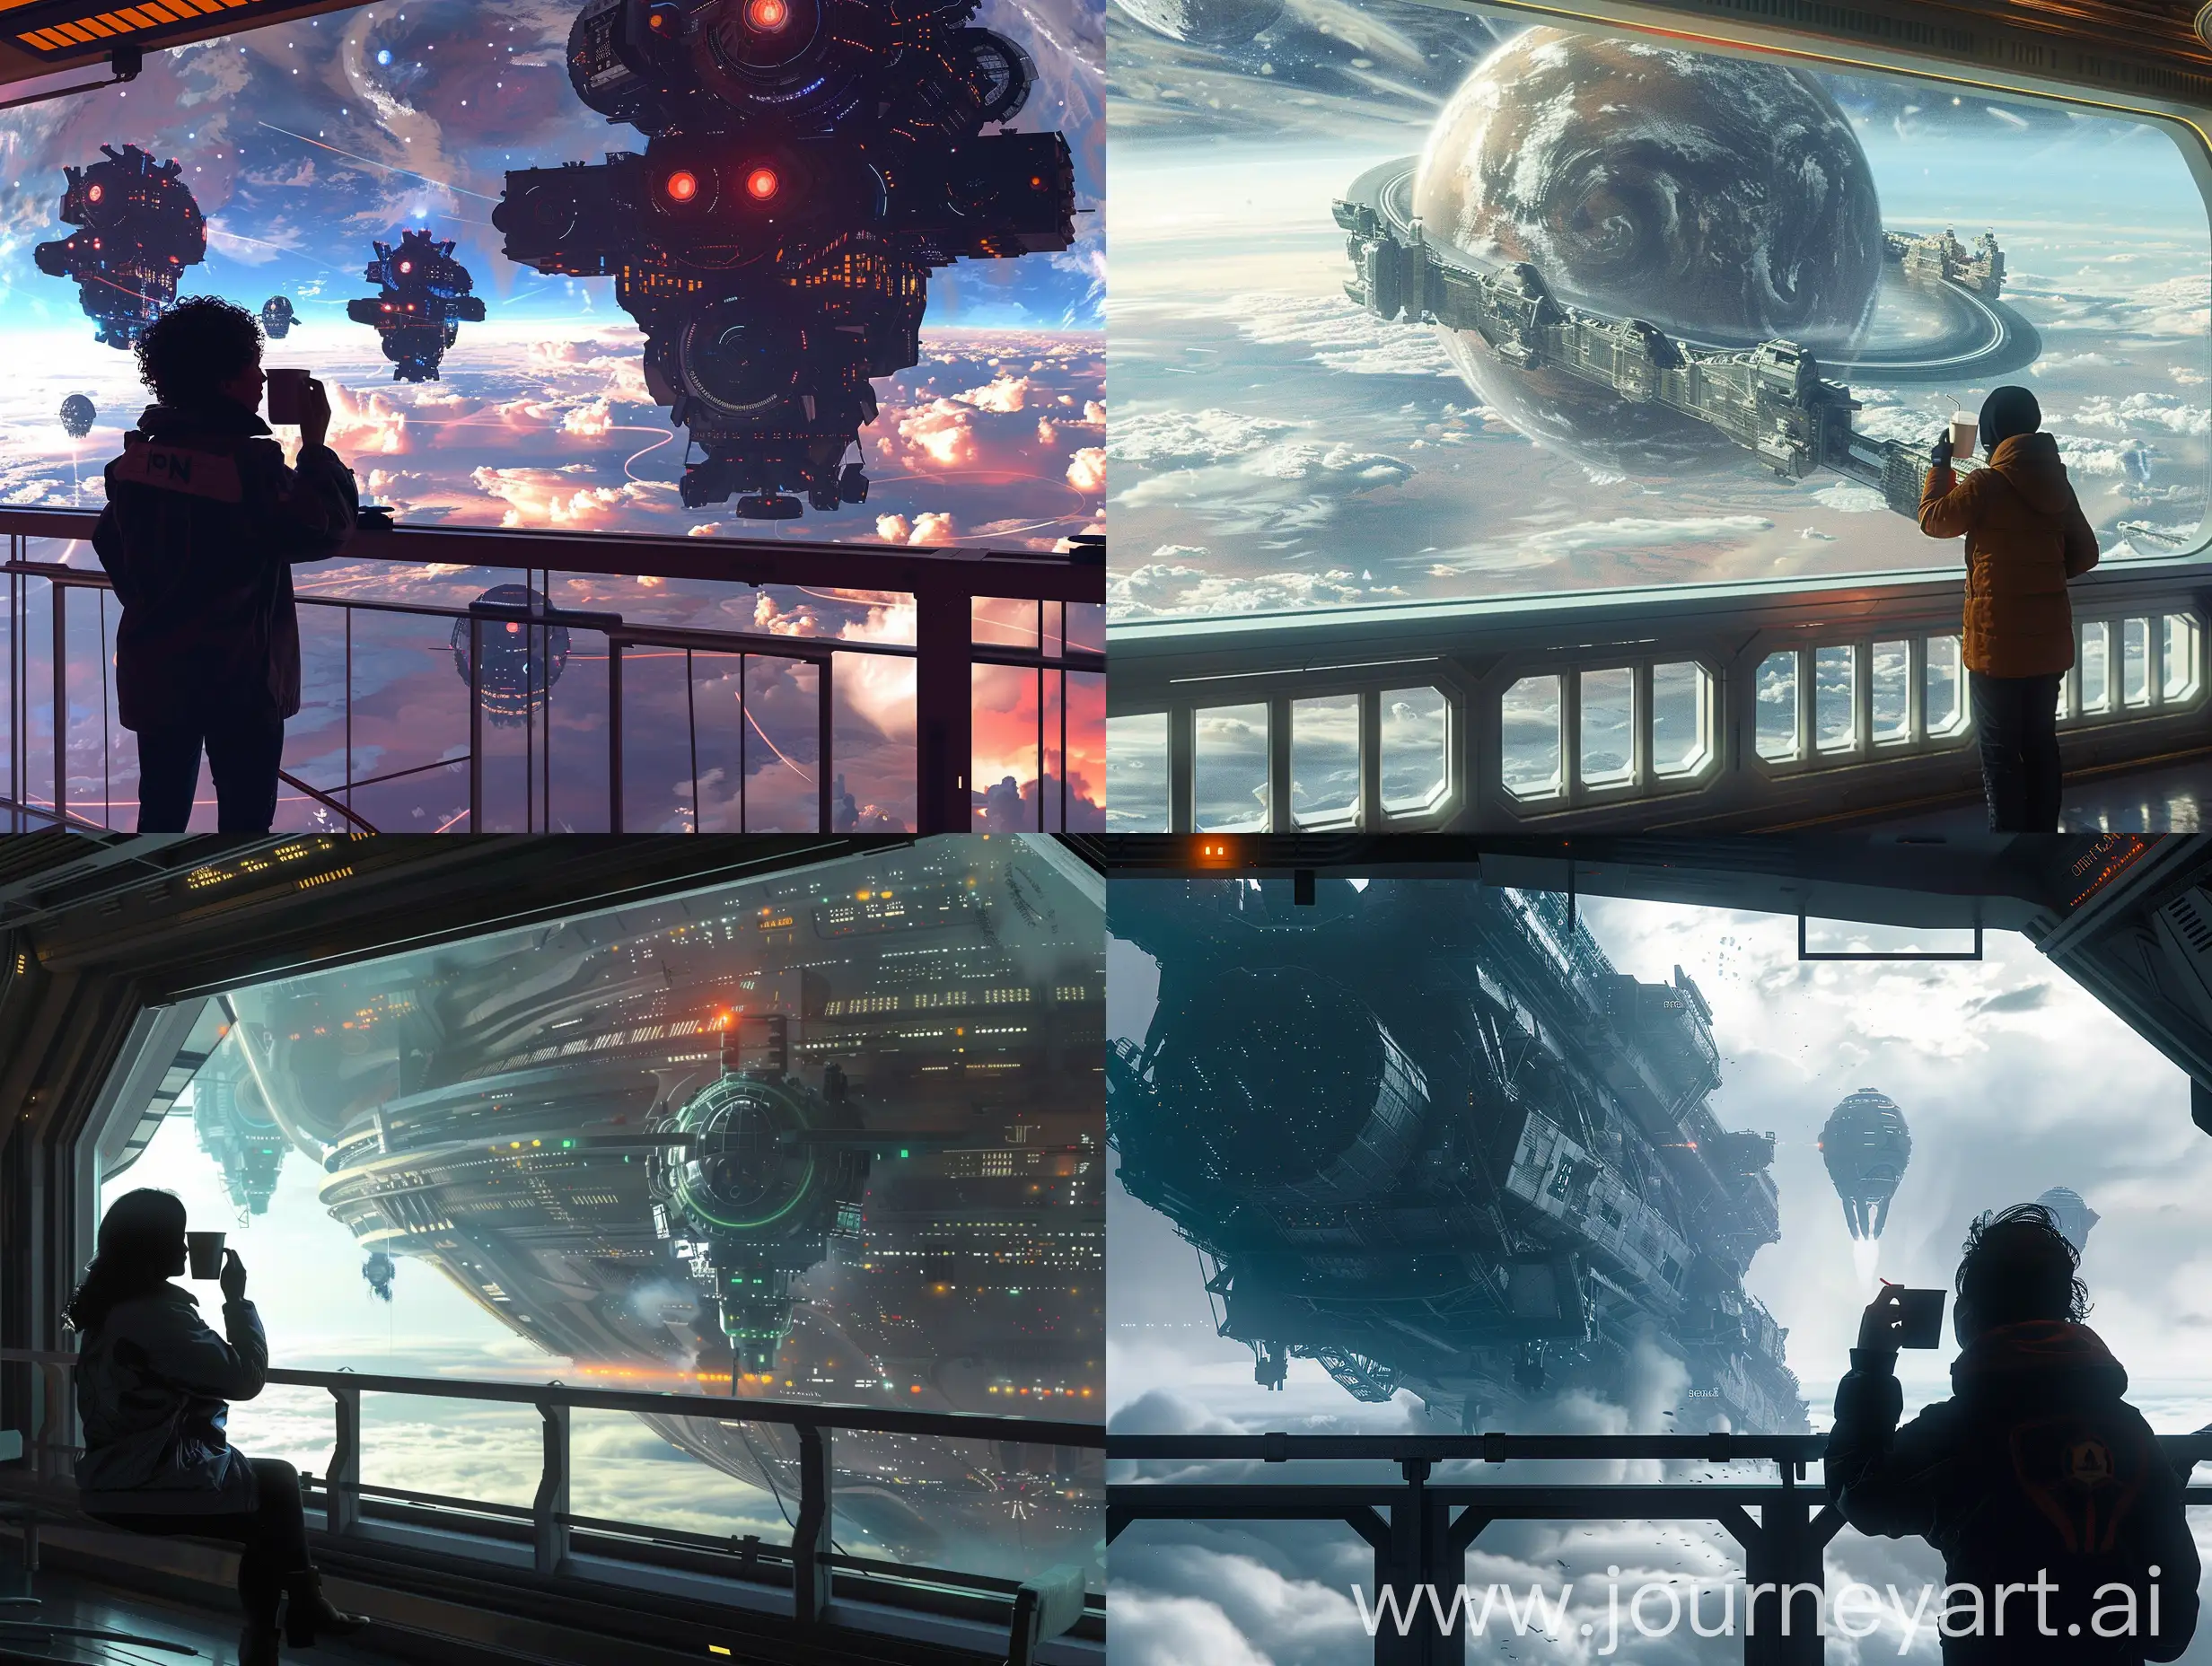 Surreal-Space-Balcony-Scene-Interstellar-Machines-in-Flight